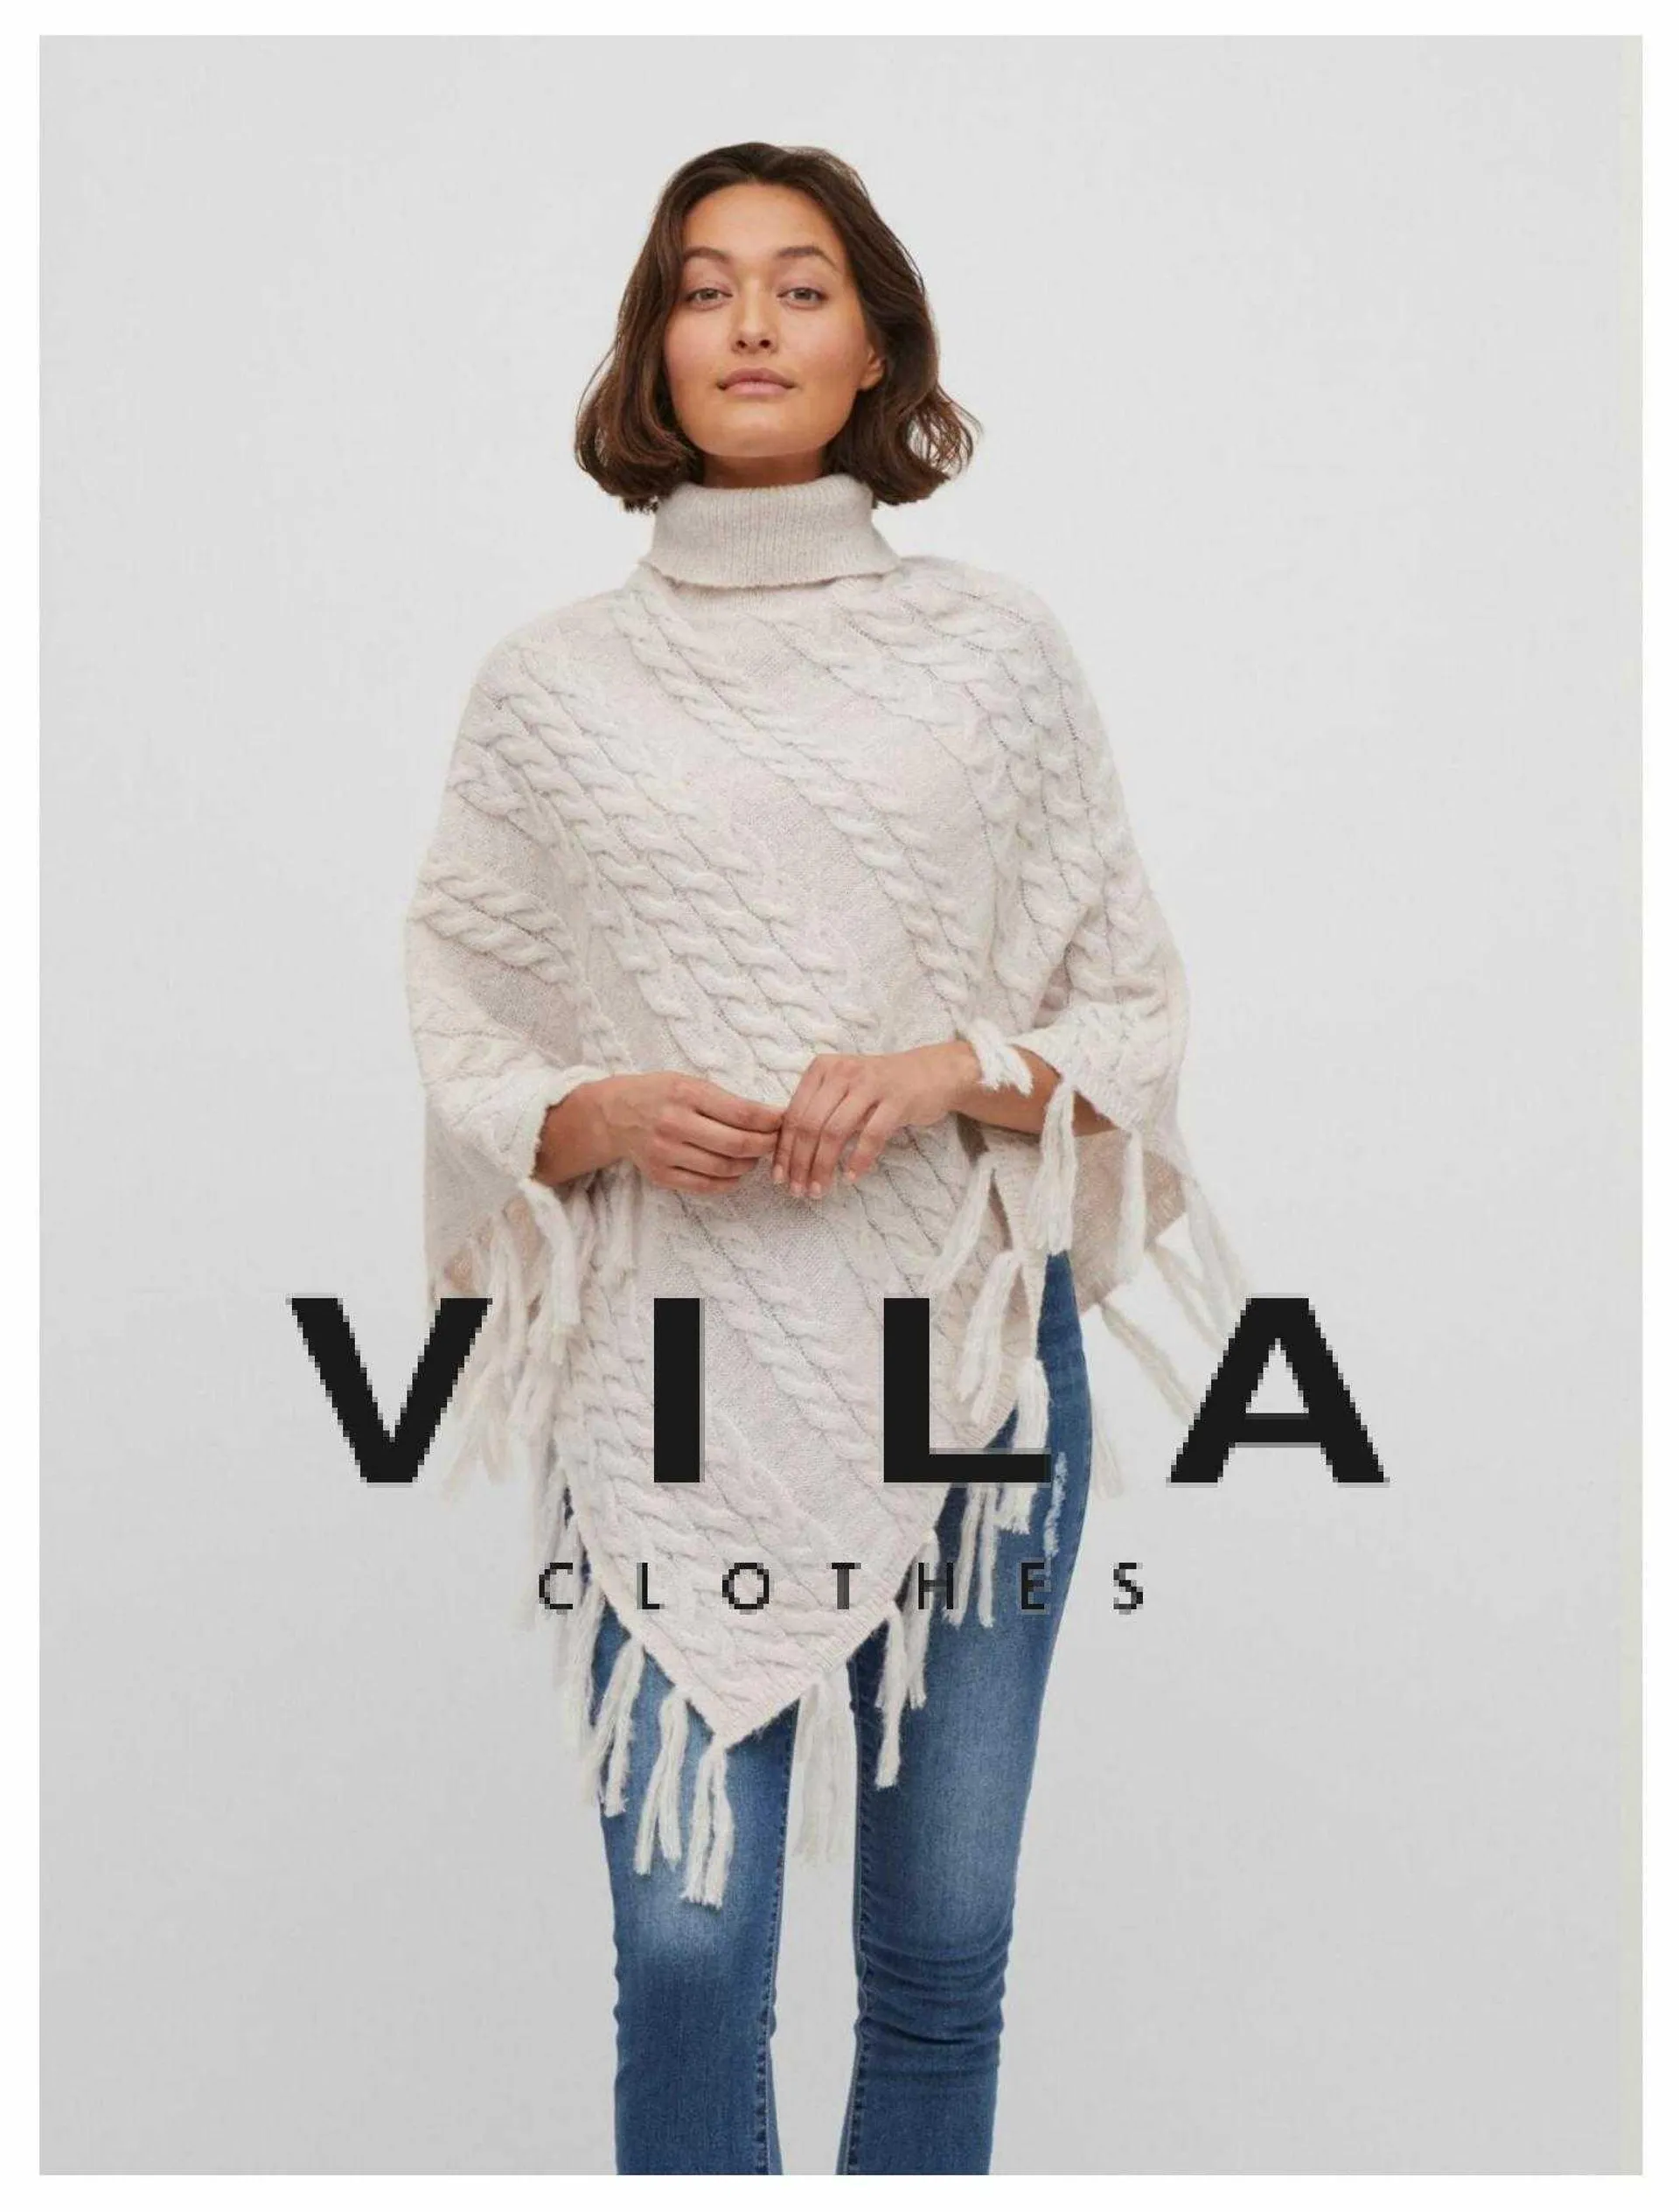 VILA Clothes Folder - 1